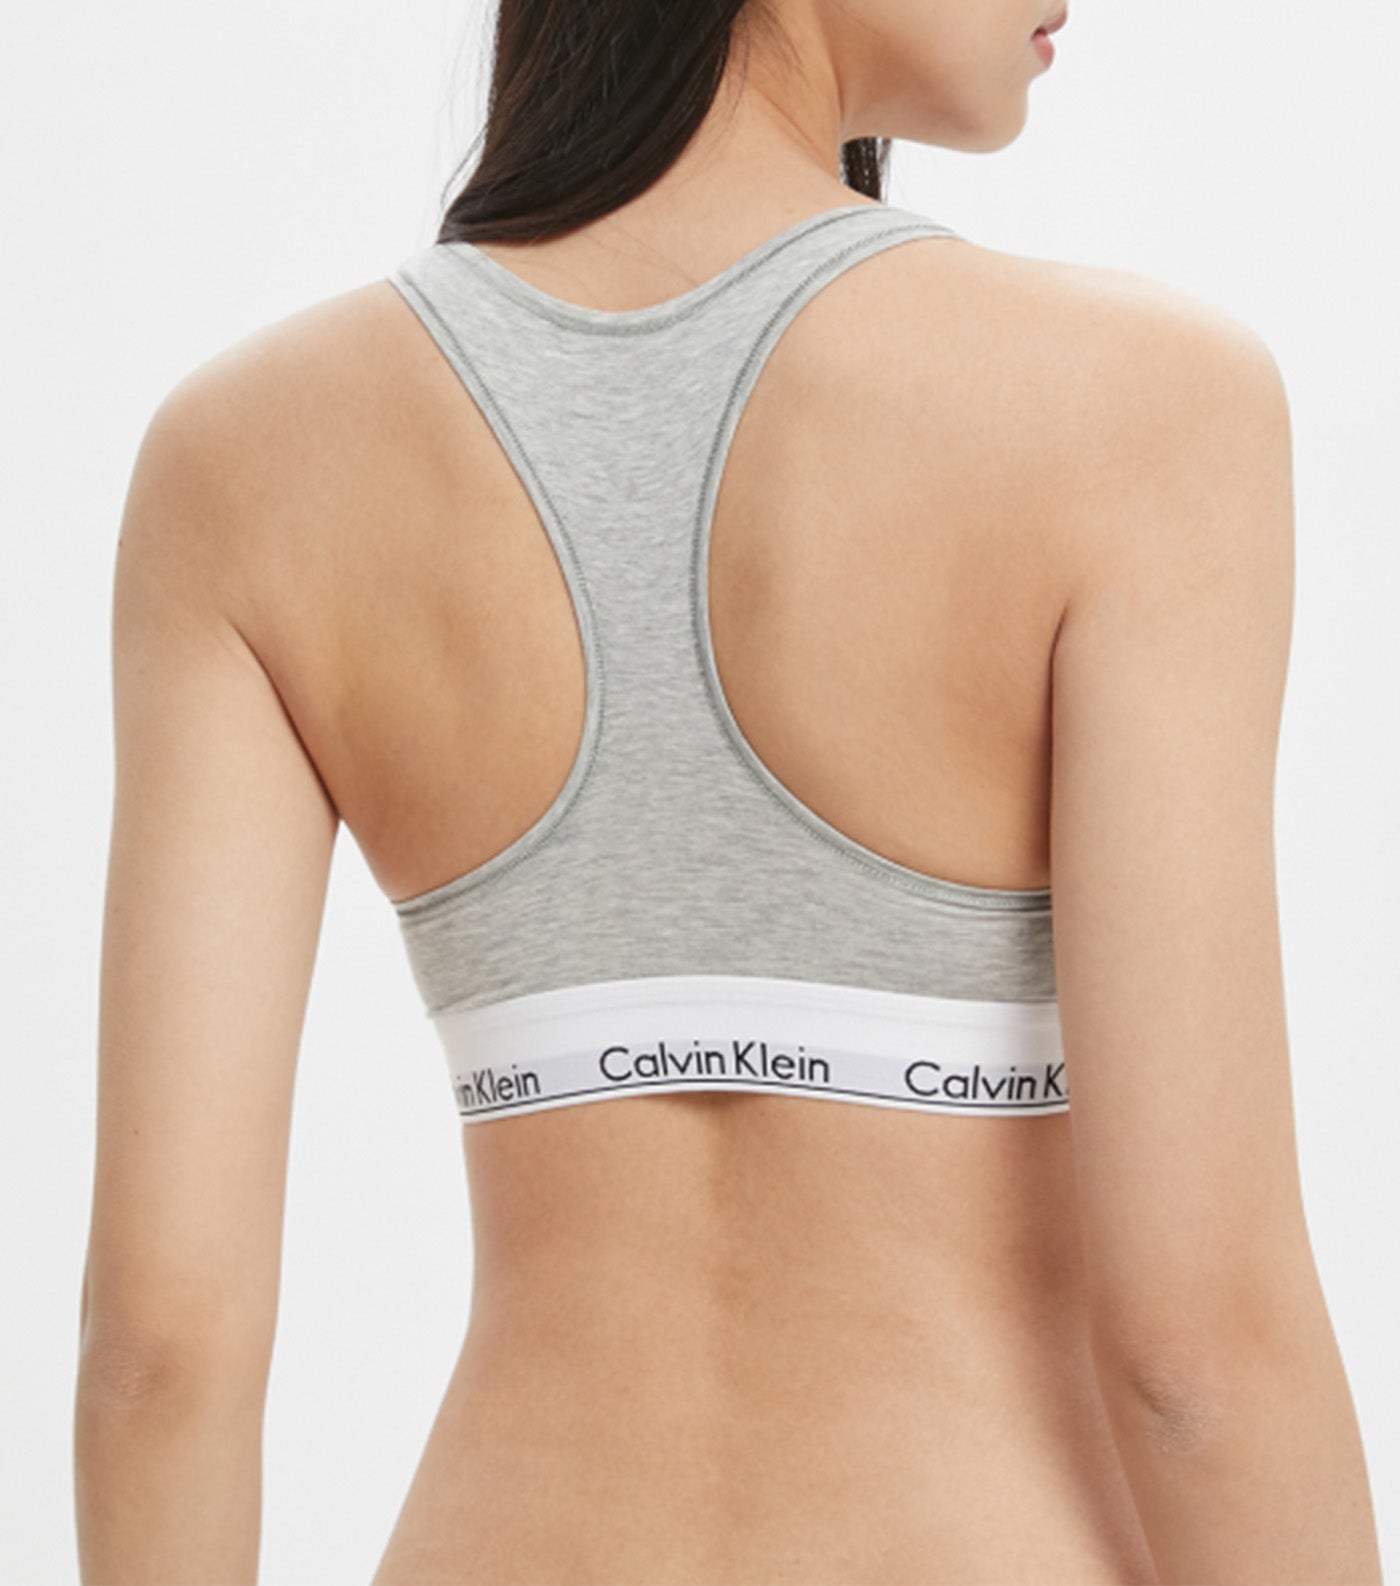 Calvin Klein Women's Modern Cotton Bralette, White, Large 